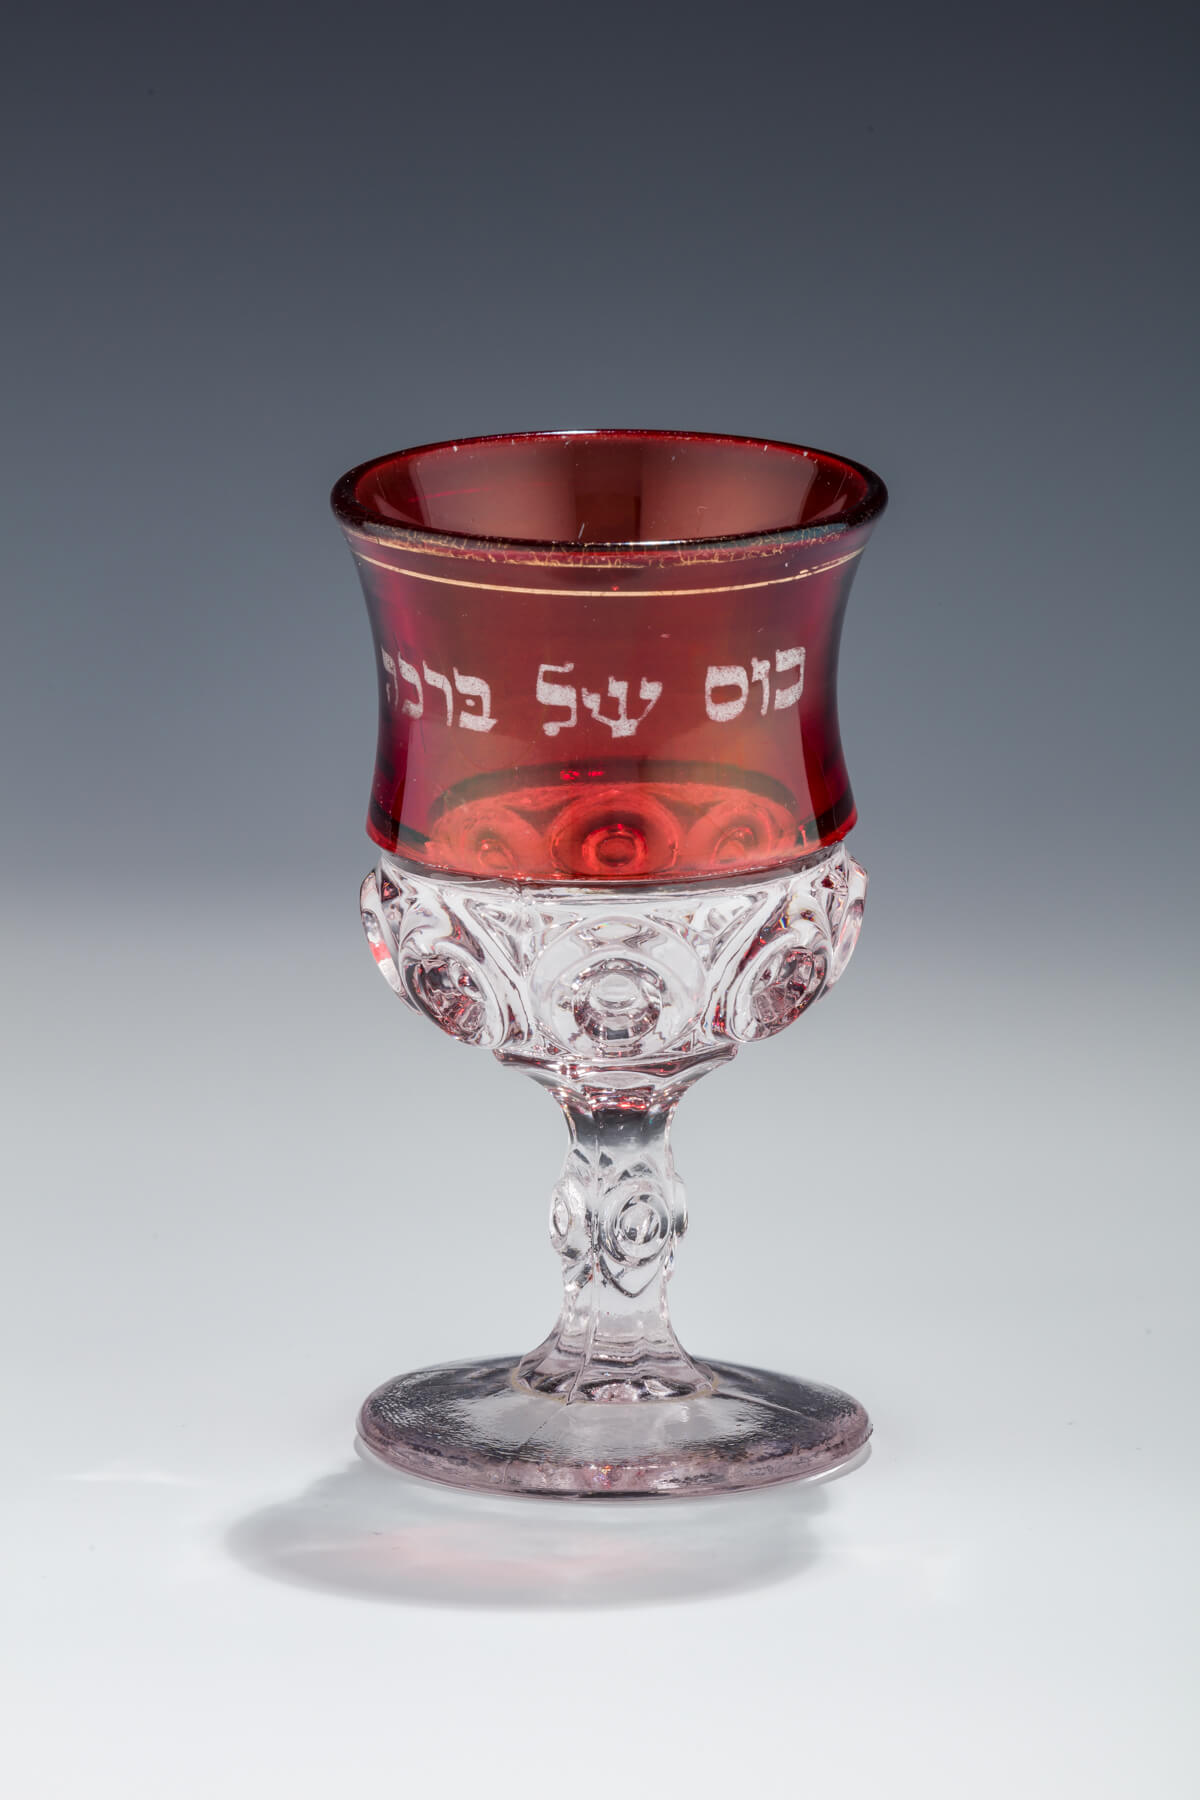 023. A Ruby Glass Kiddush Cup